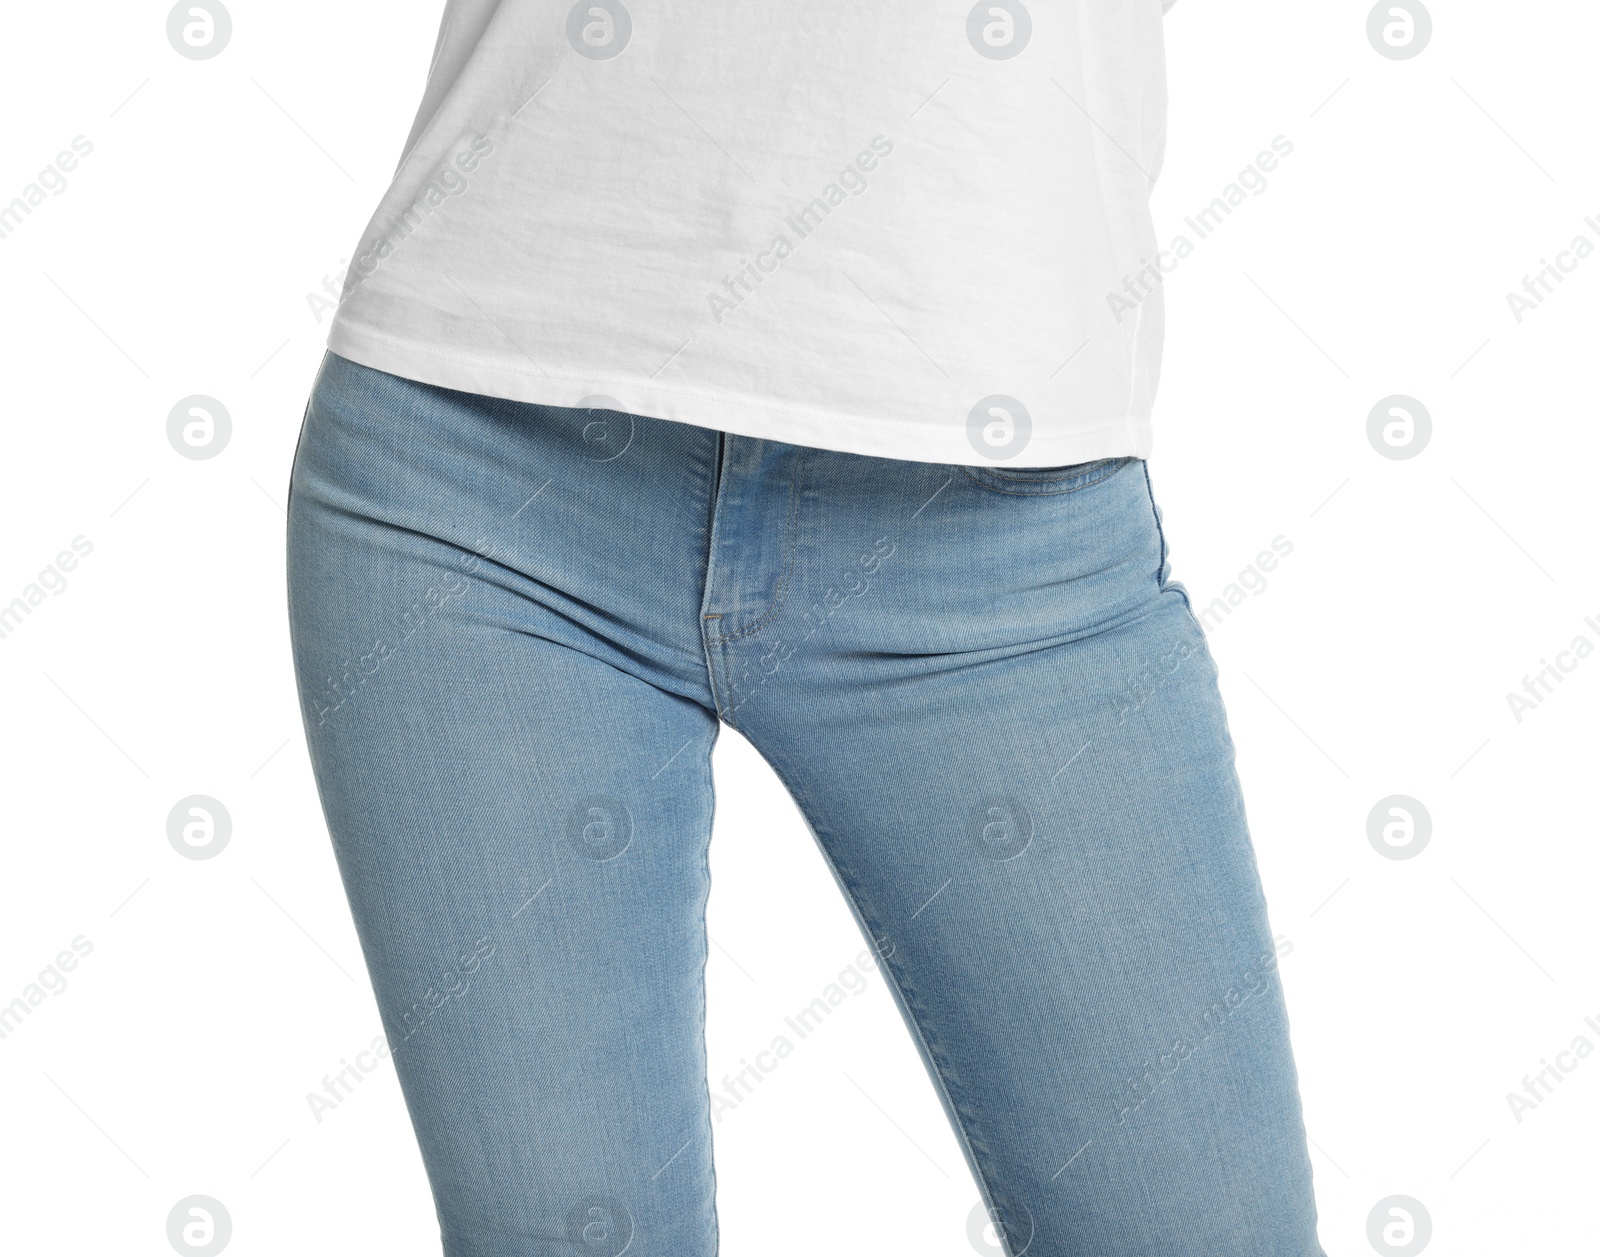 Photo of Woman wearing stylish light blue jeans on white background, closeup